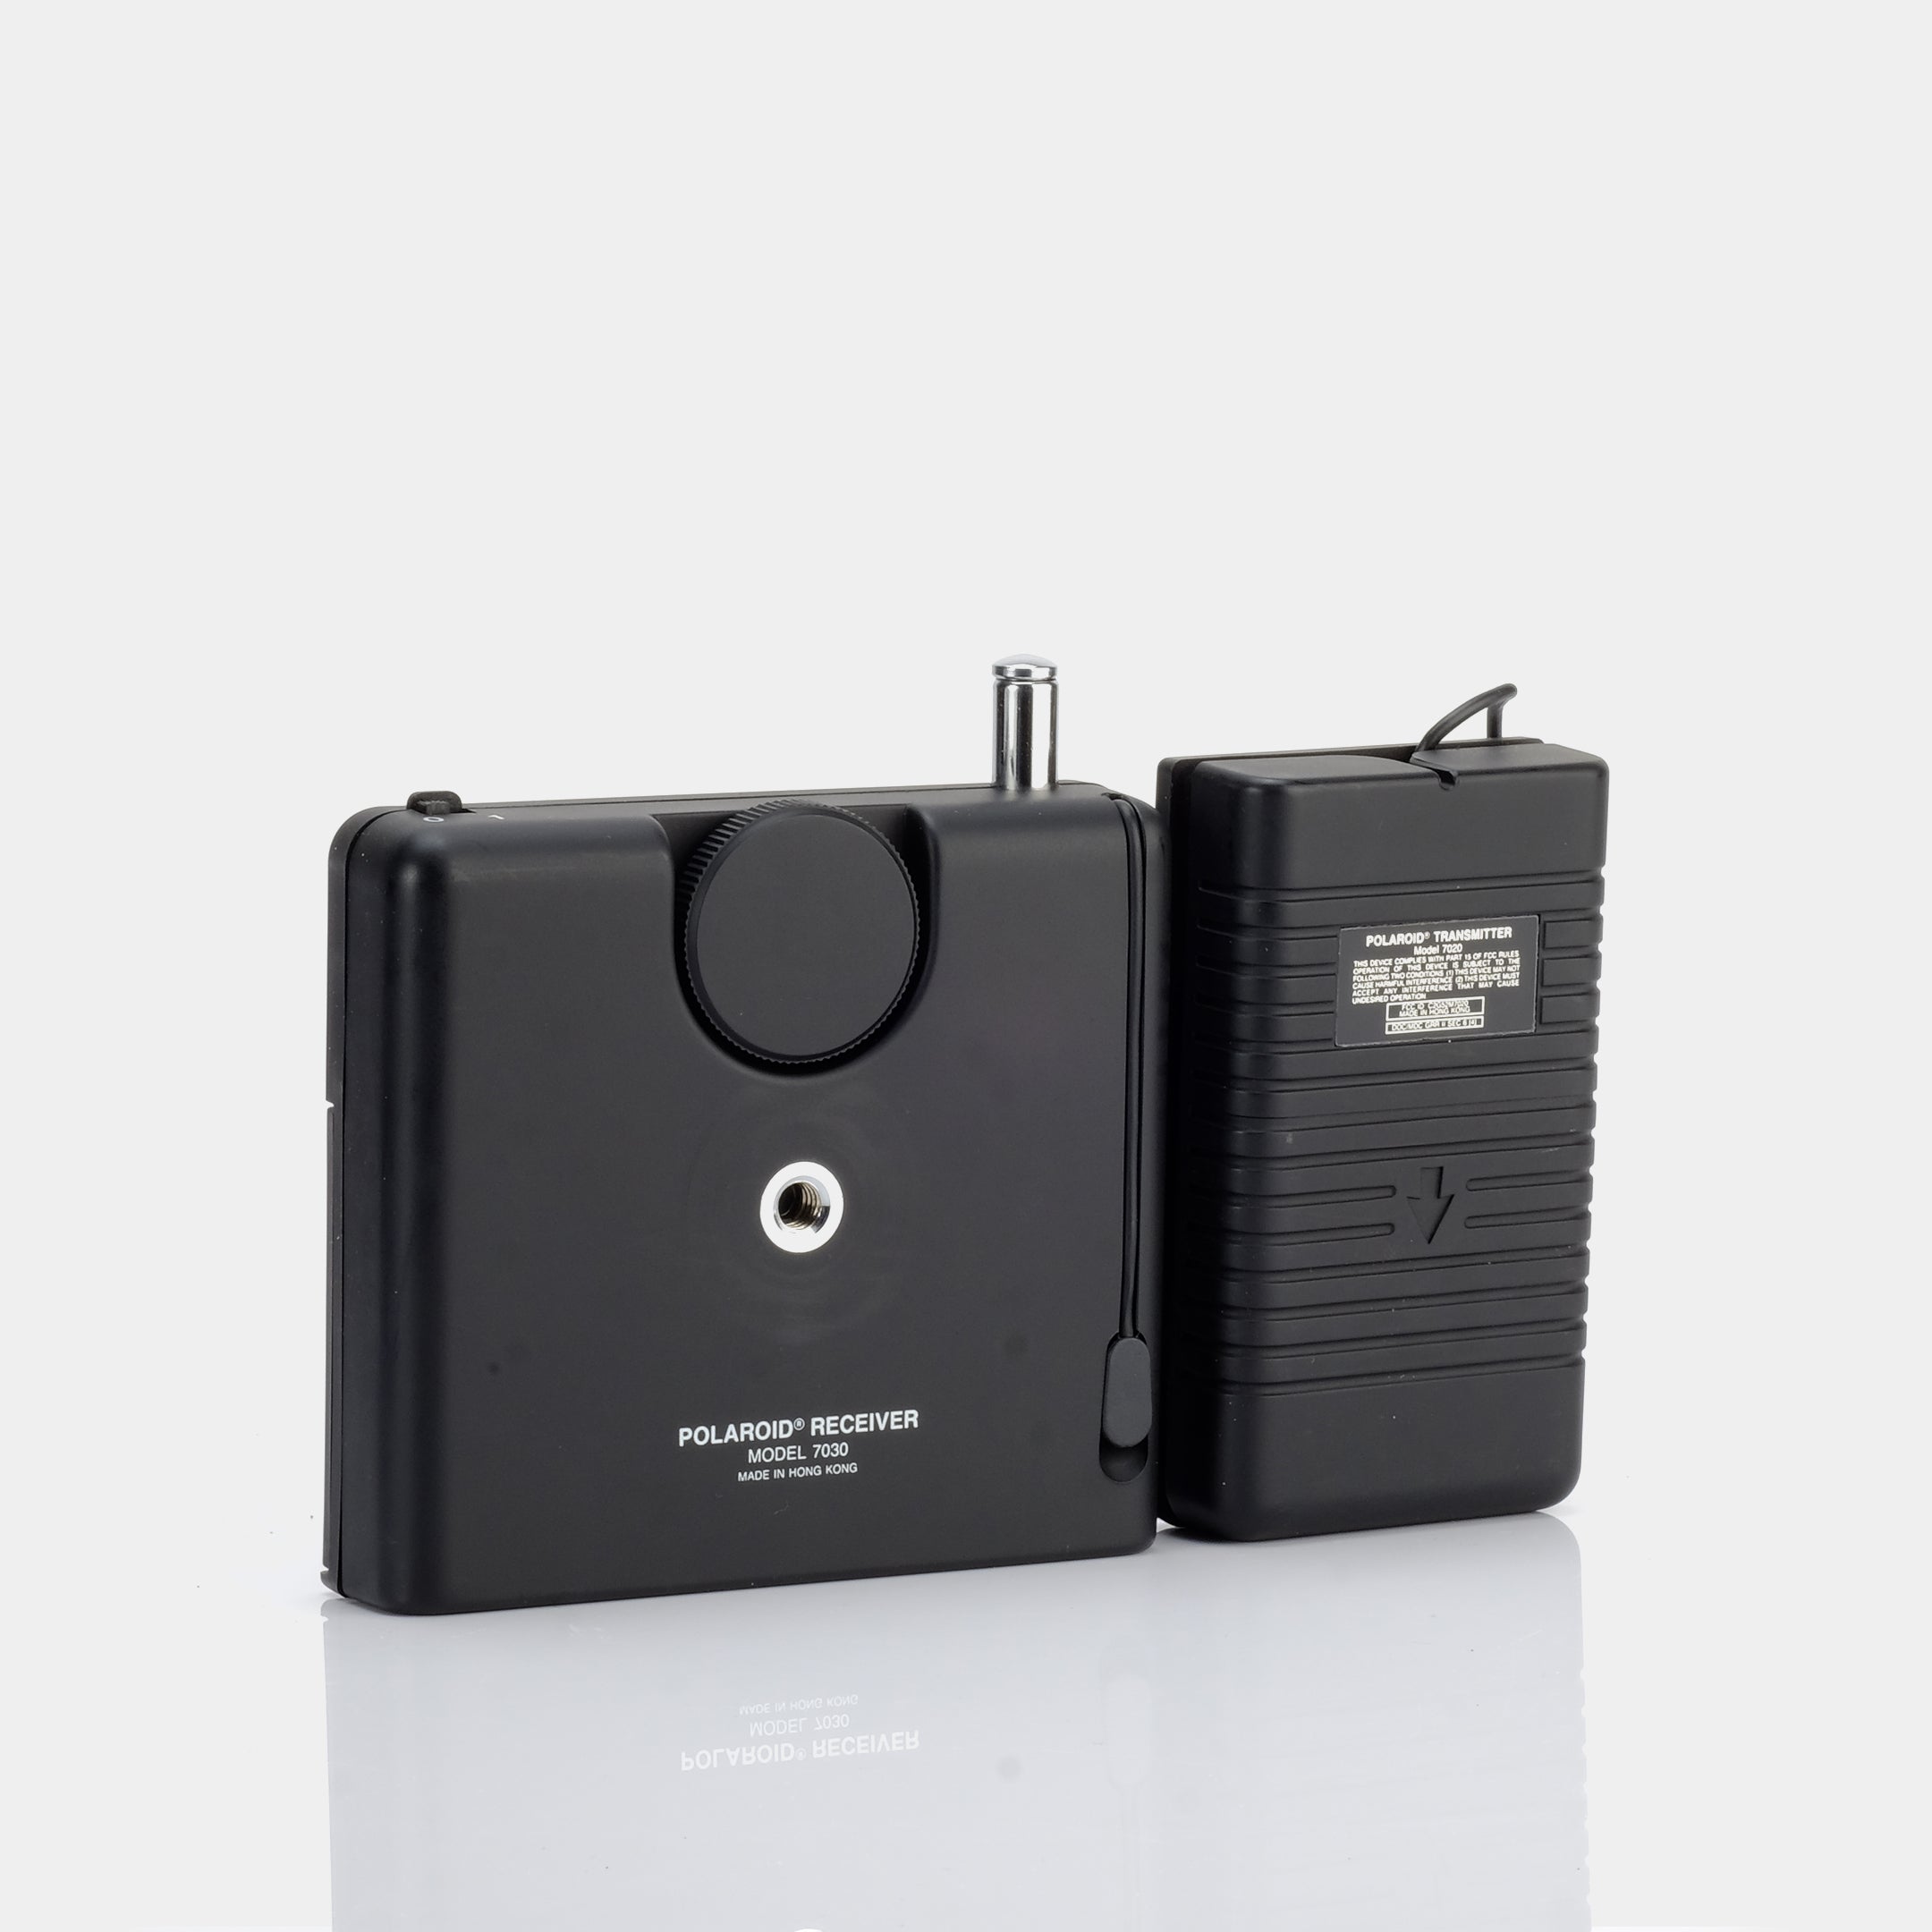 Polaroid Spectra Remote Control Set